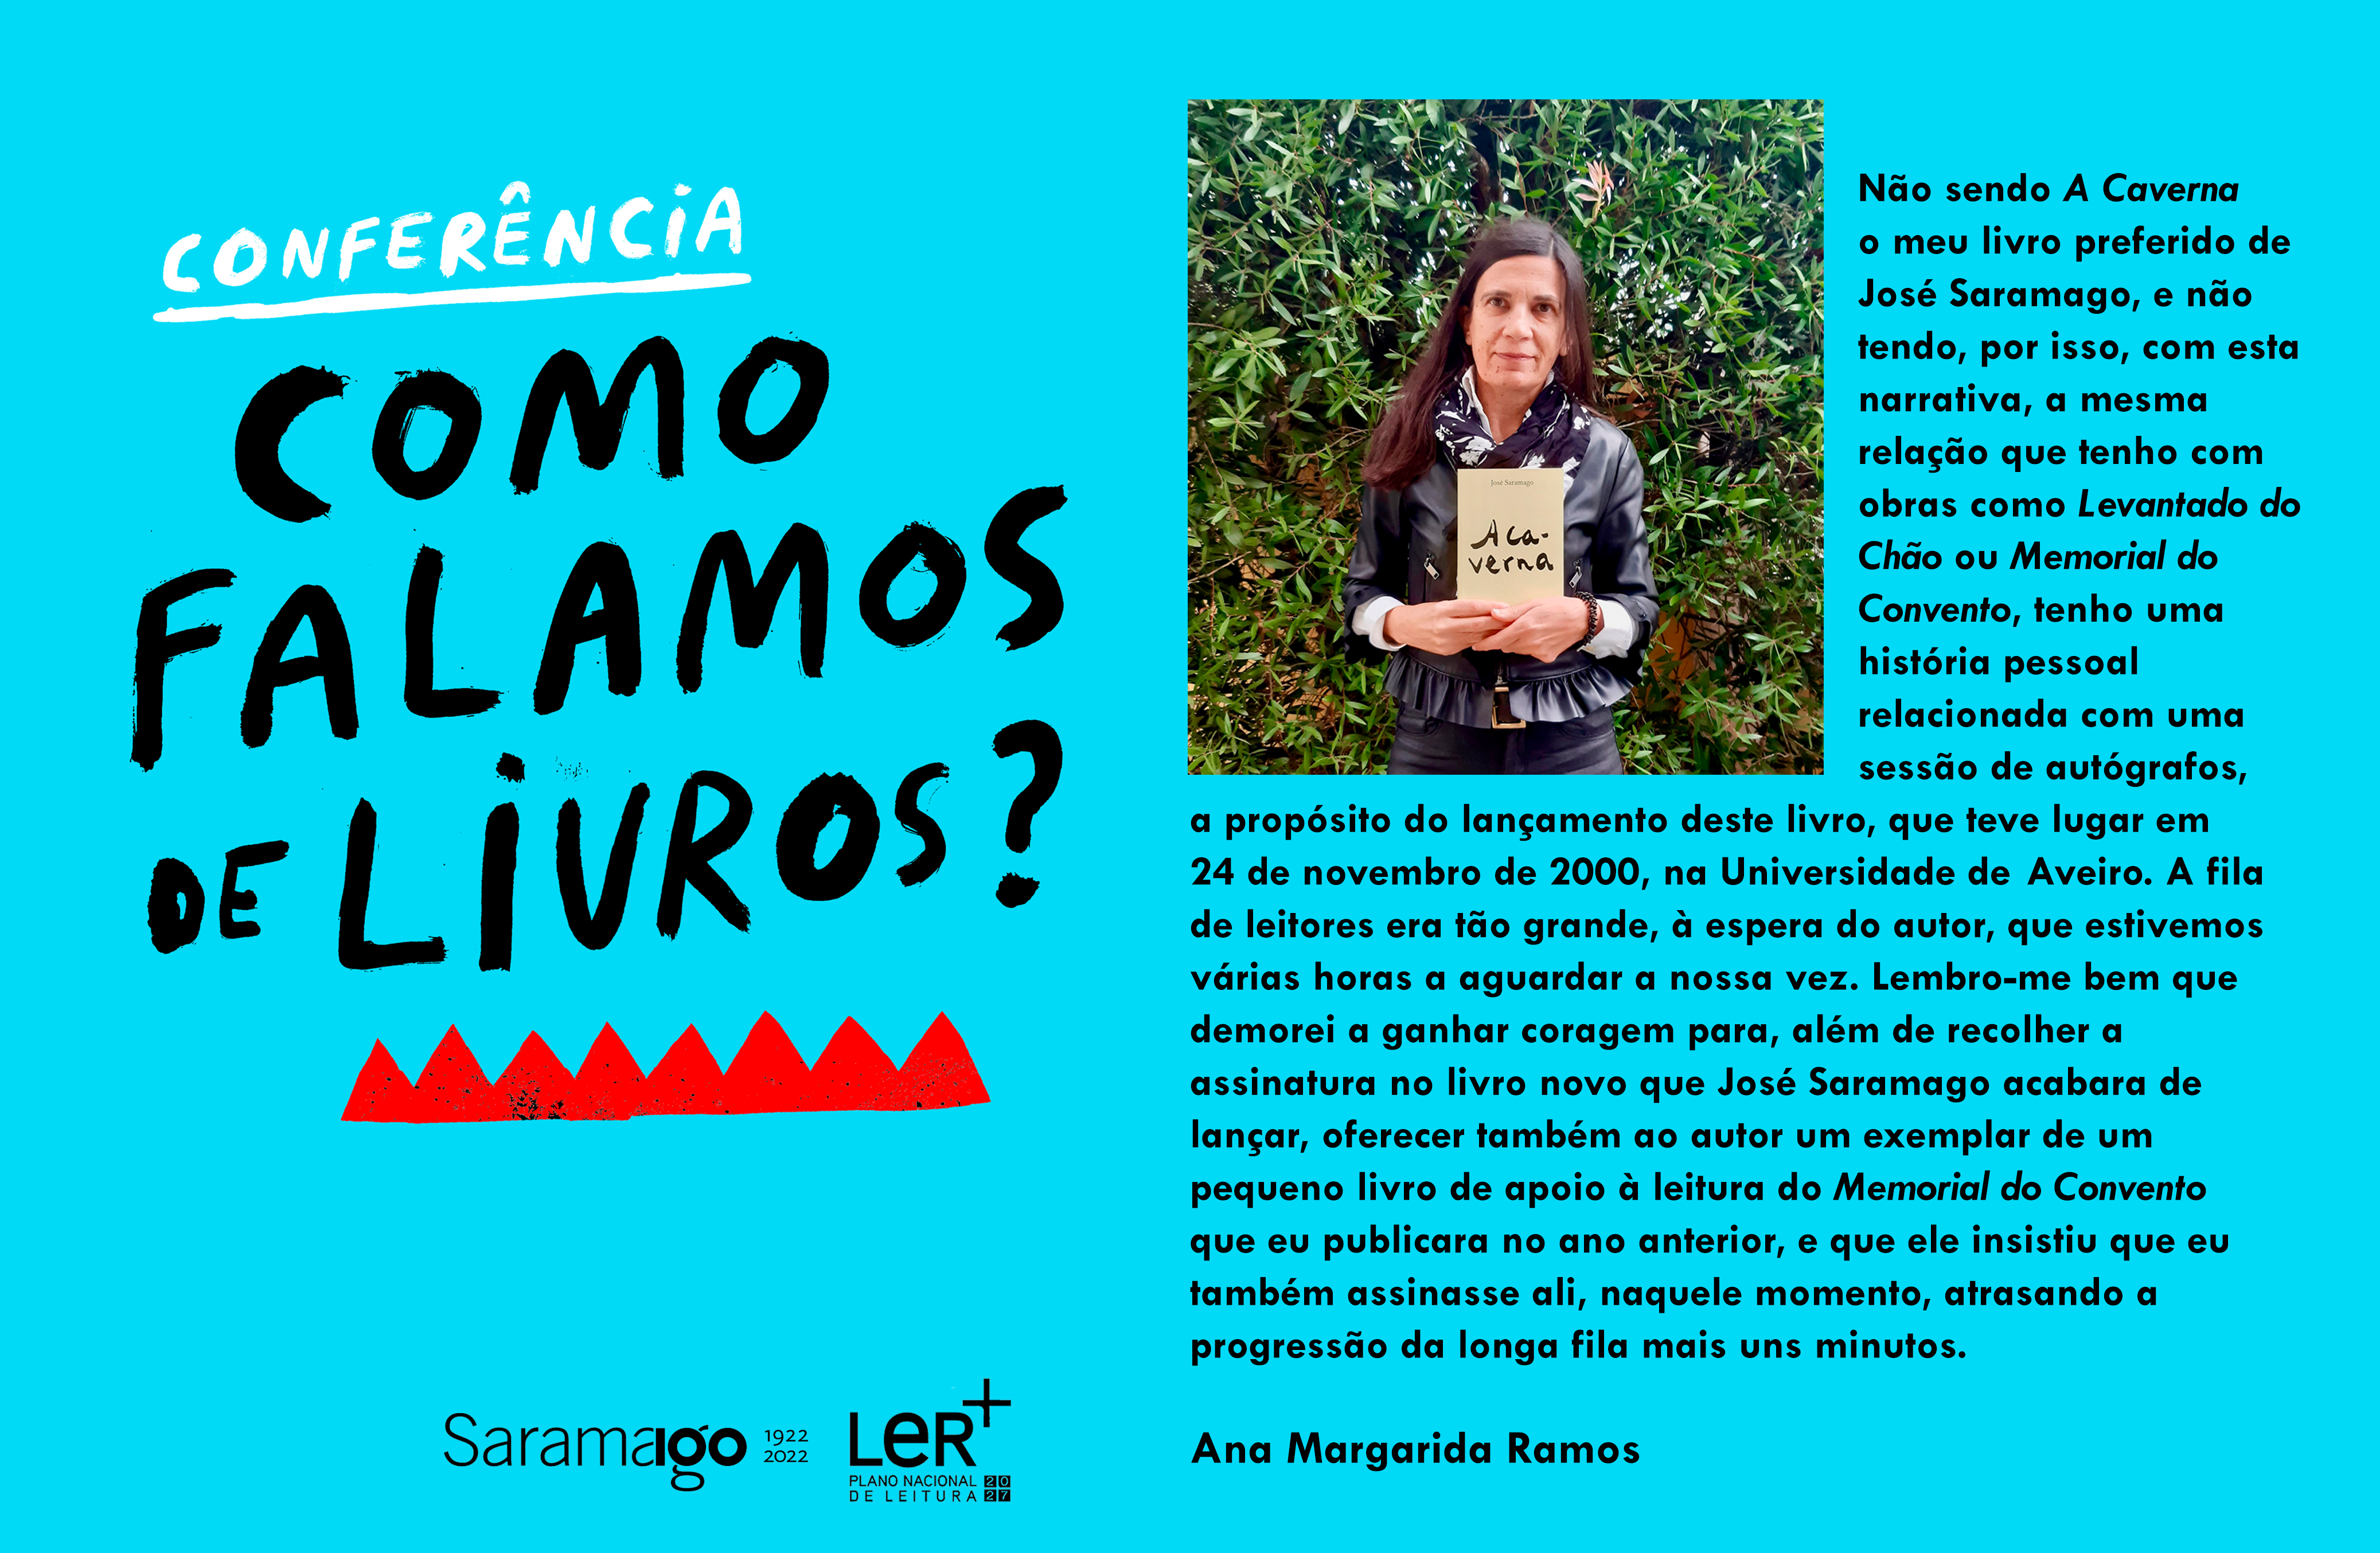 Ler_Saramago_Ana_Margarida_Ramos